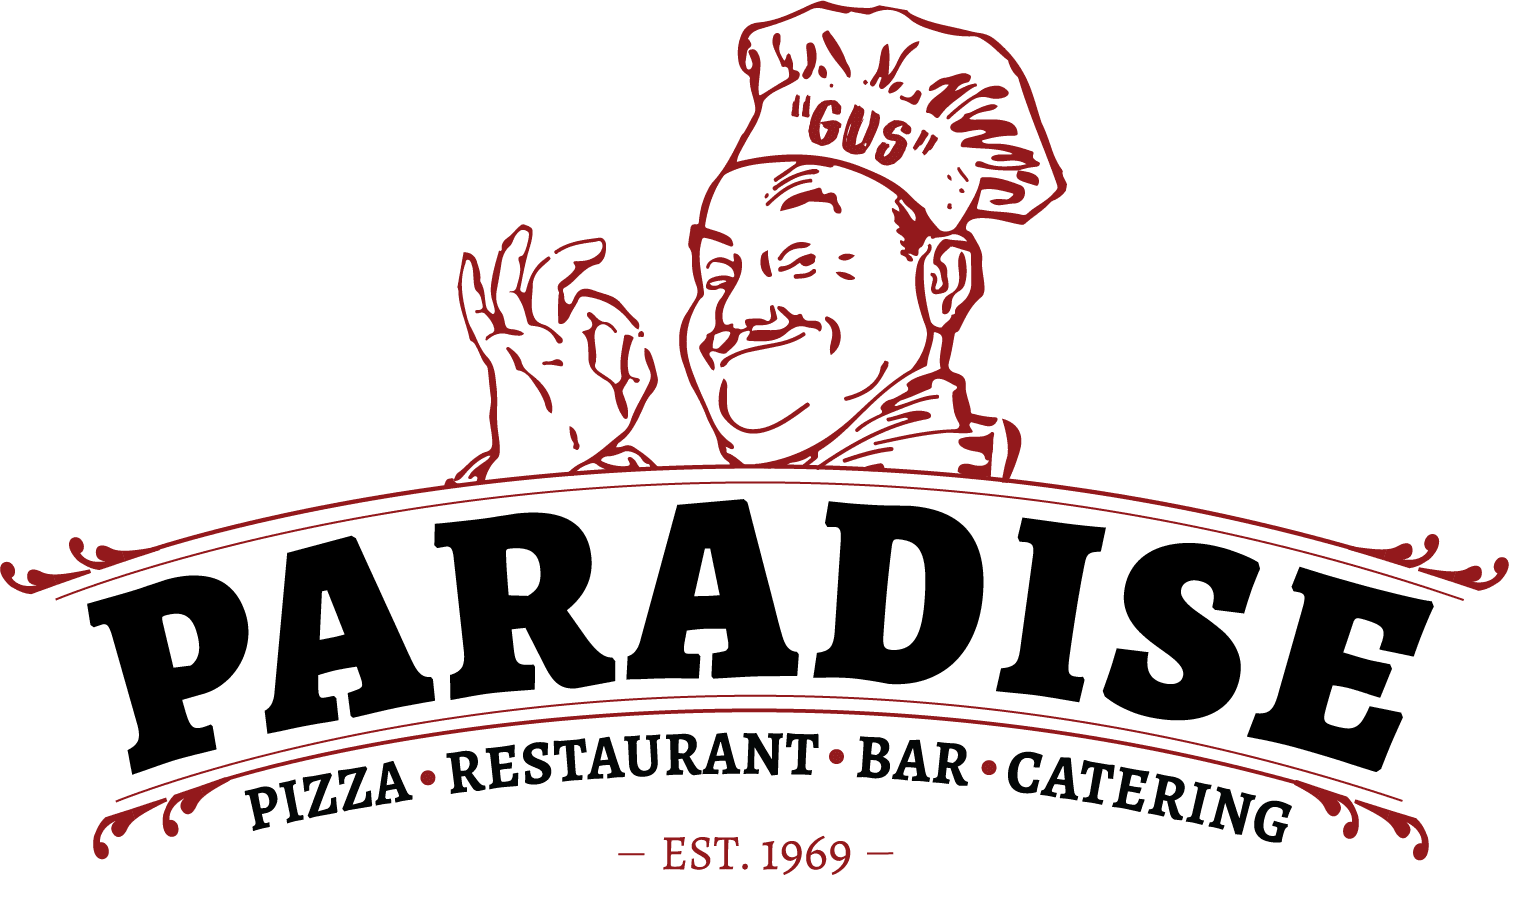 Paradise Pizza Restaurant